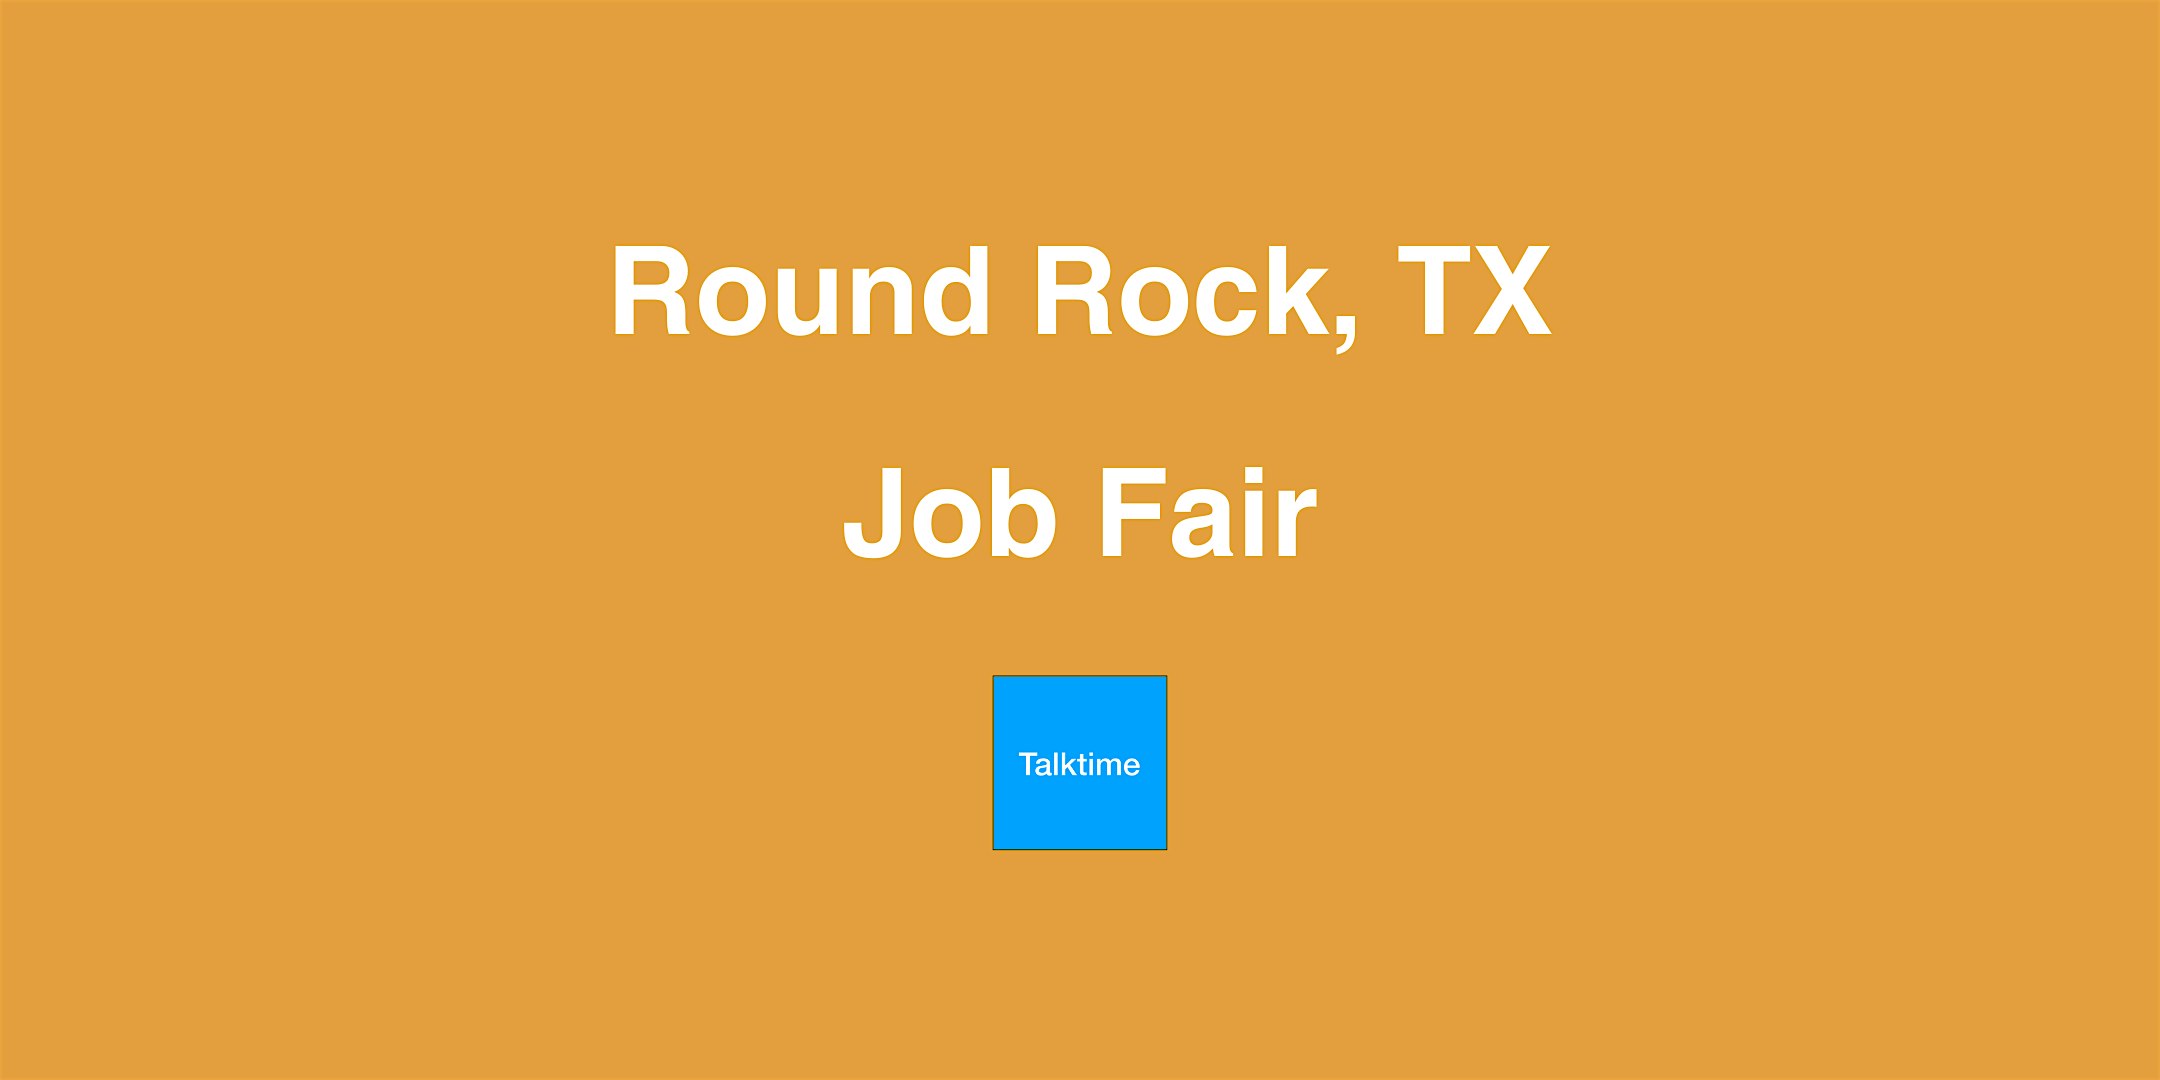 Job Fair - Round Rock